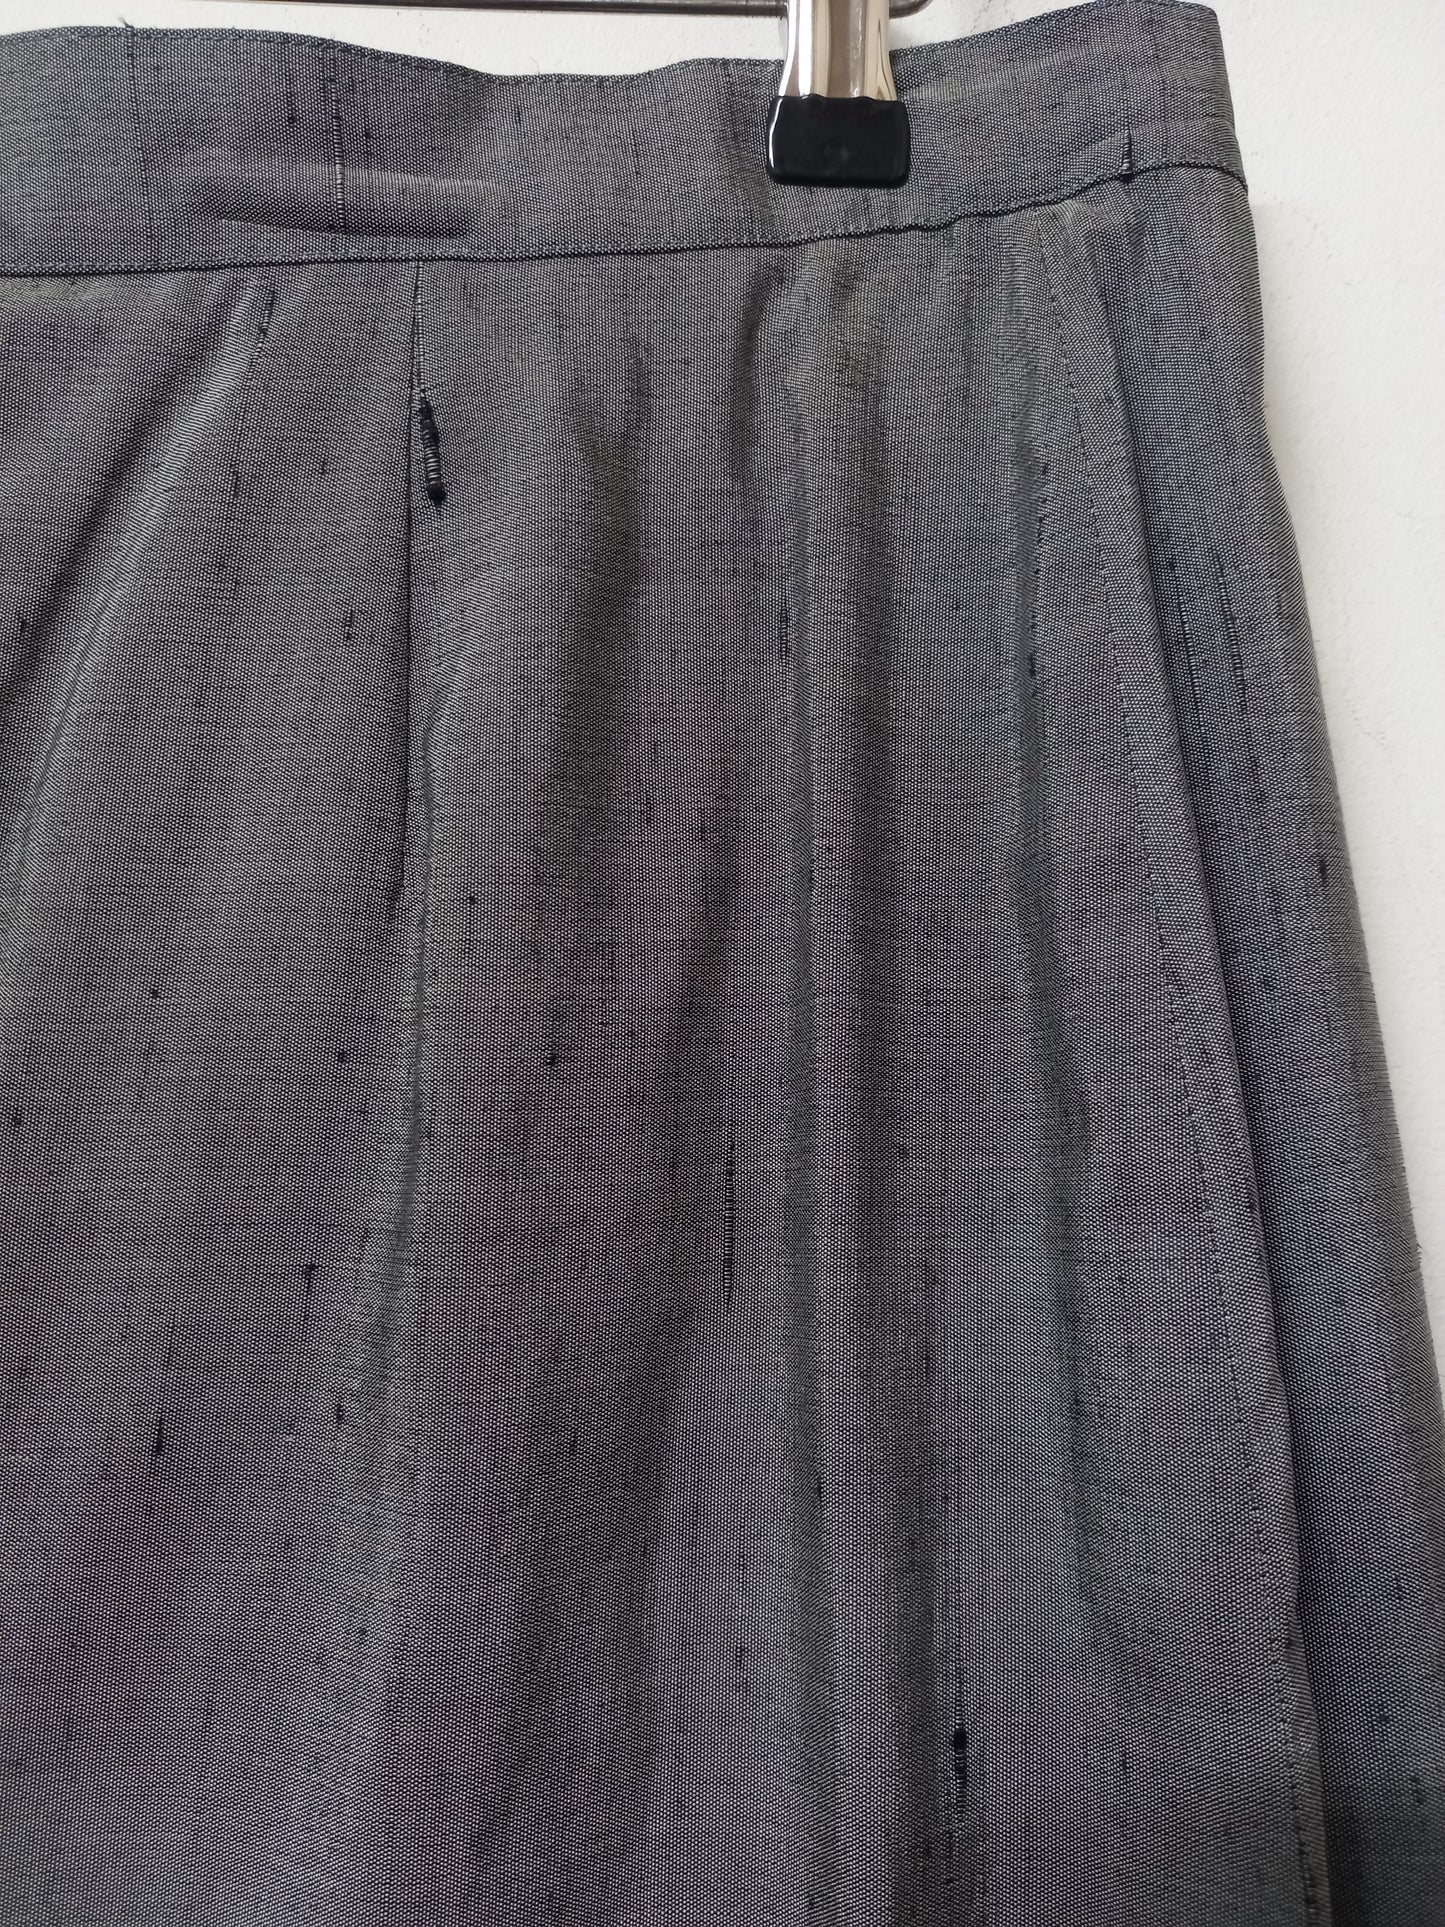 Metallic Grey Skirt Size 14/16